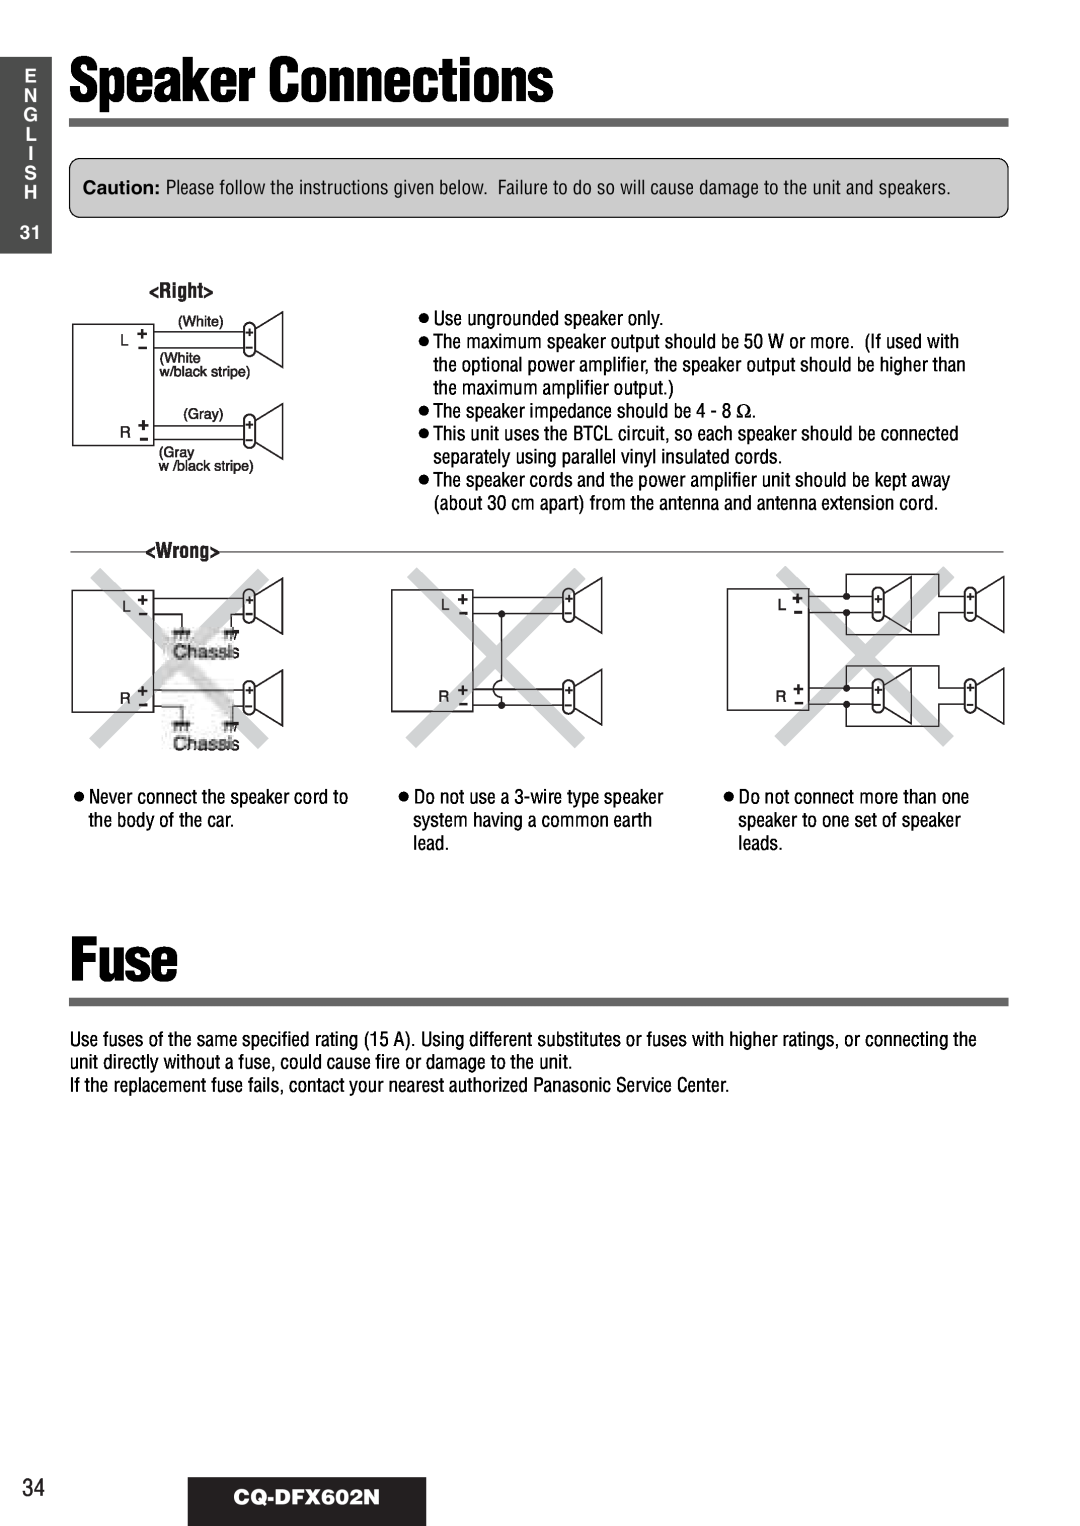 Panasonic manual Speaker Connections, Fuse, 34CQ-DFX602N, E N G L I S H 